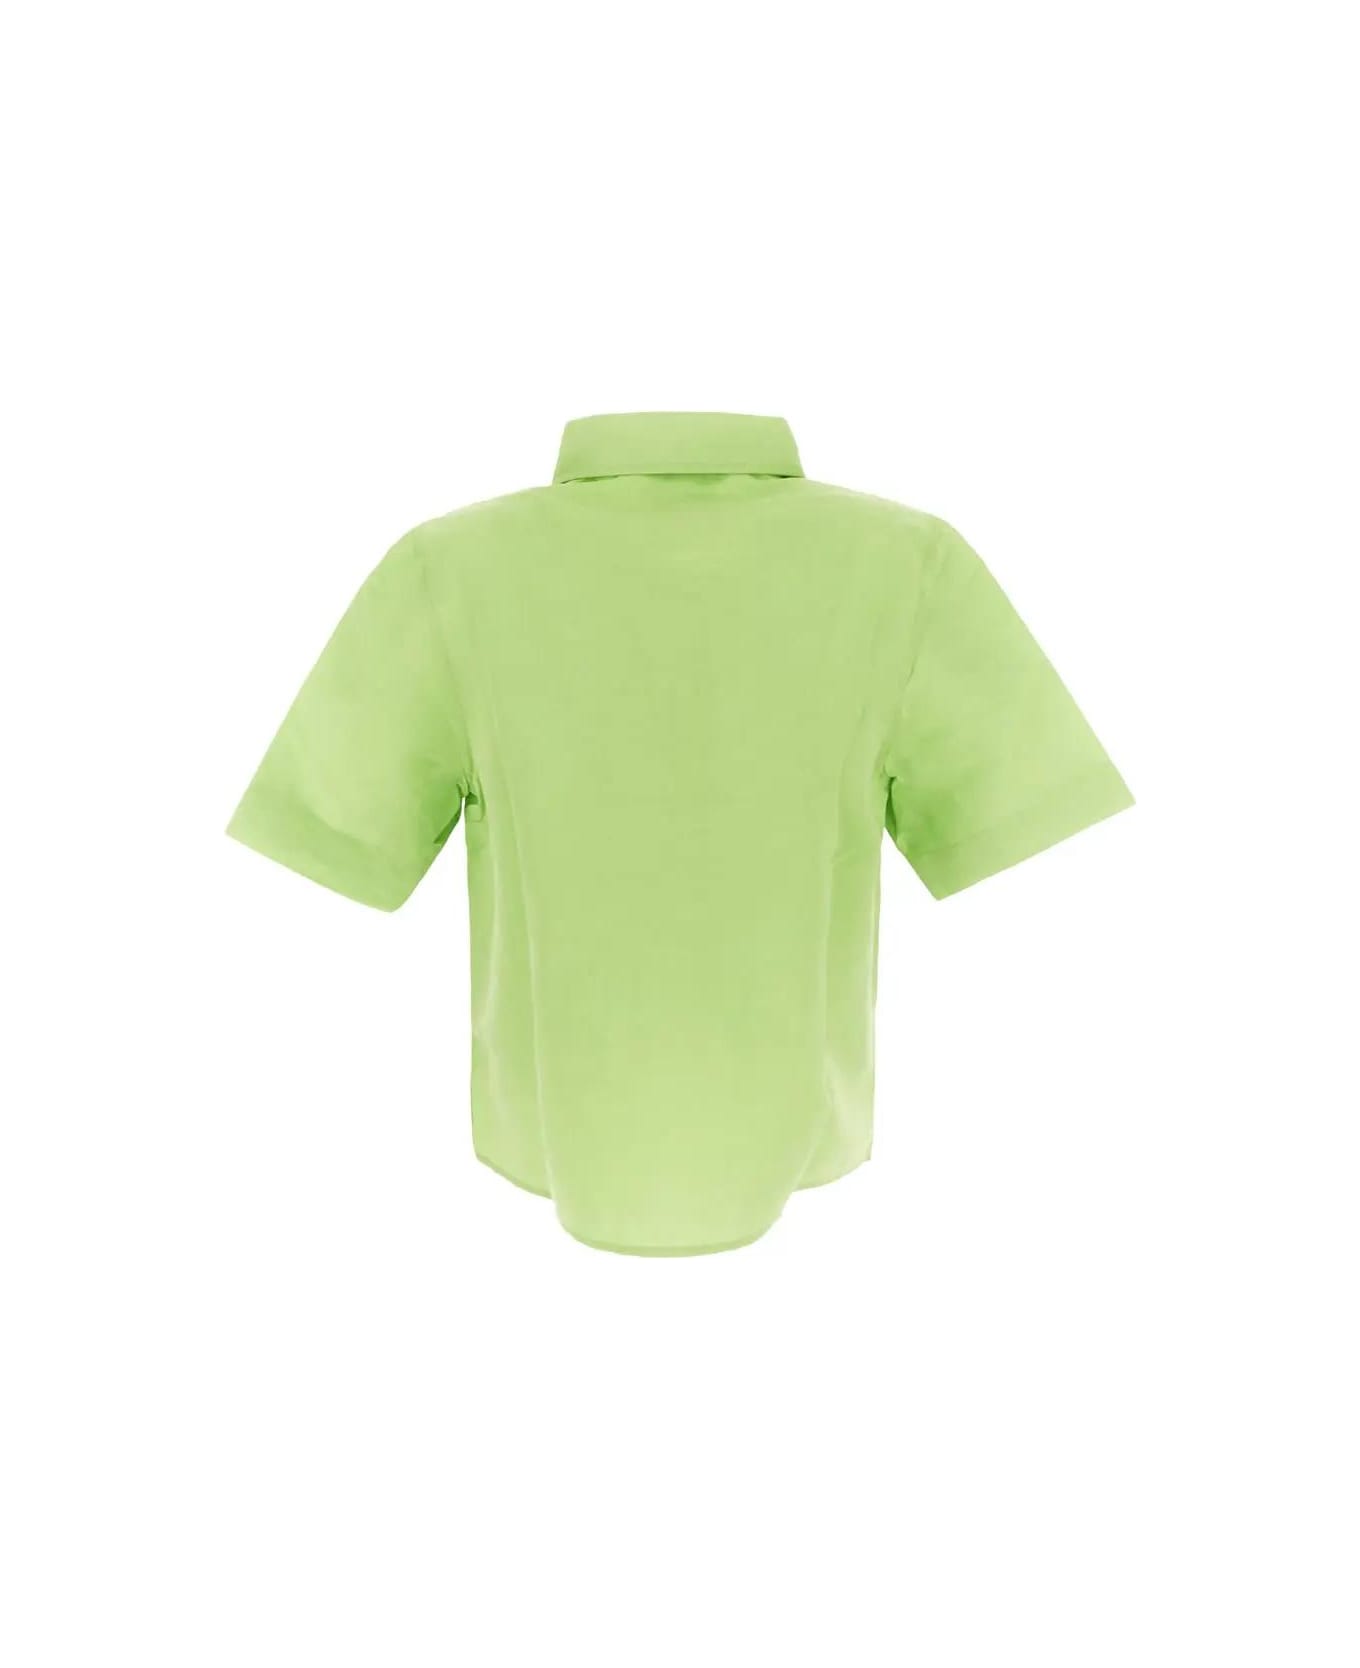 Lido Cropped Shirt - Lime